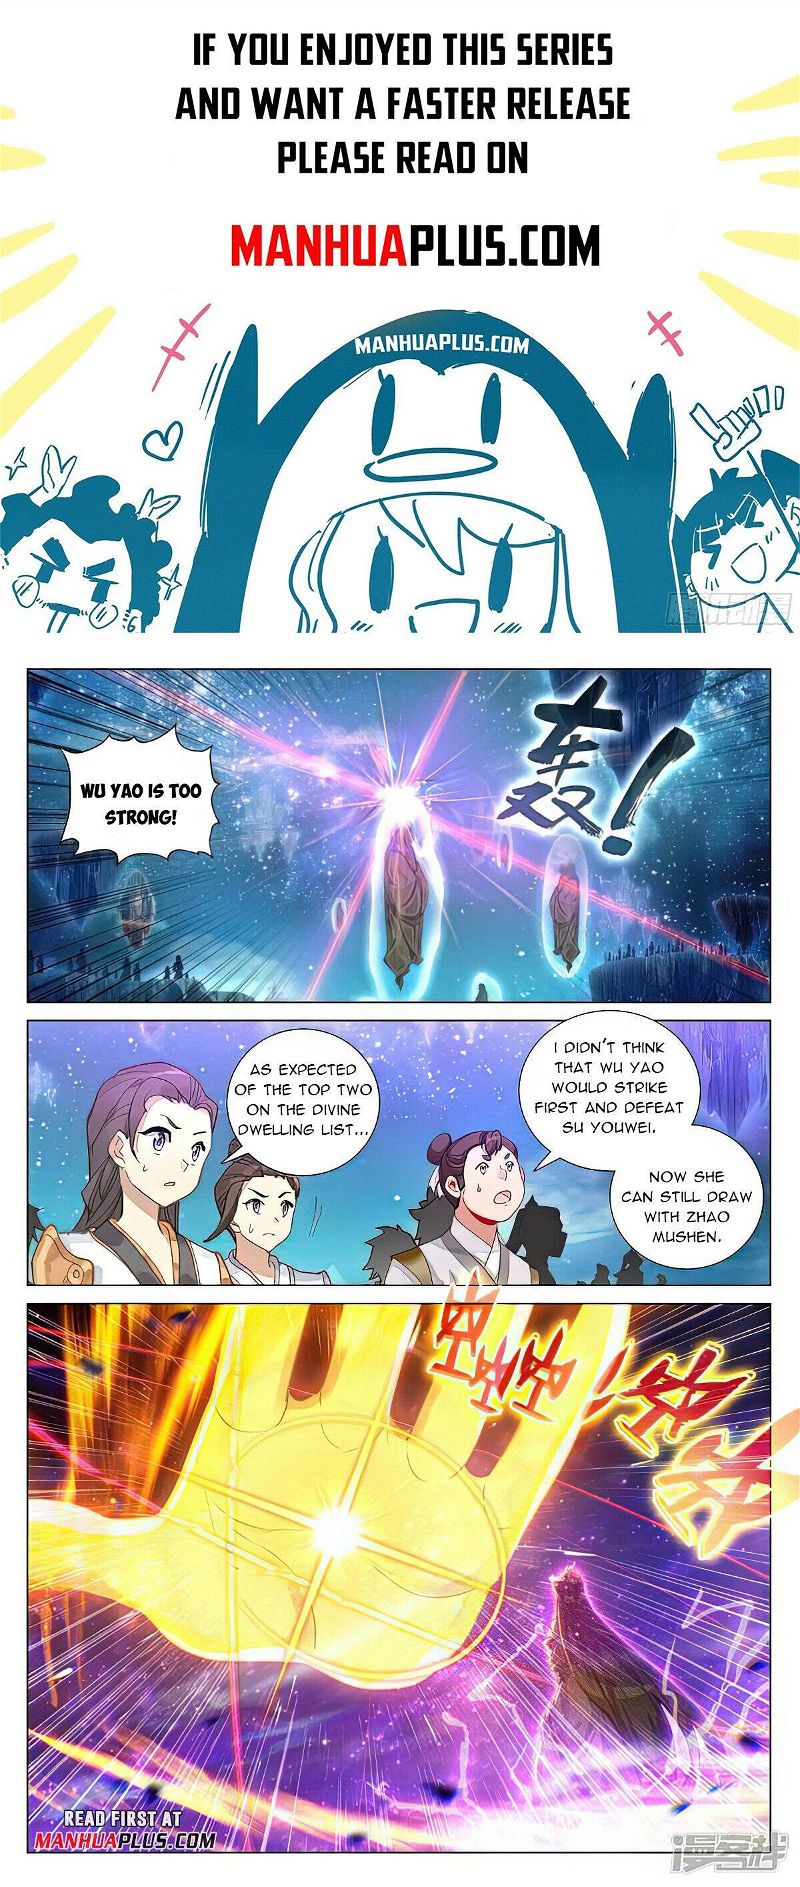 Yuan Zun Chapter 466.5 page 1 - MangaWeebs.in